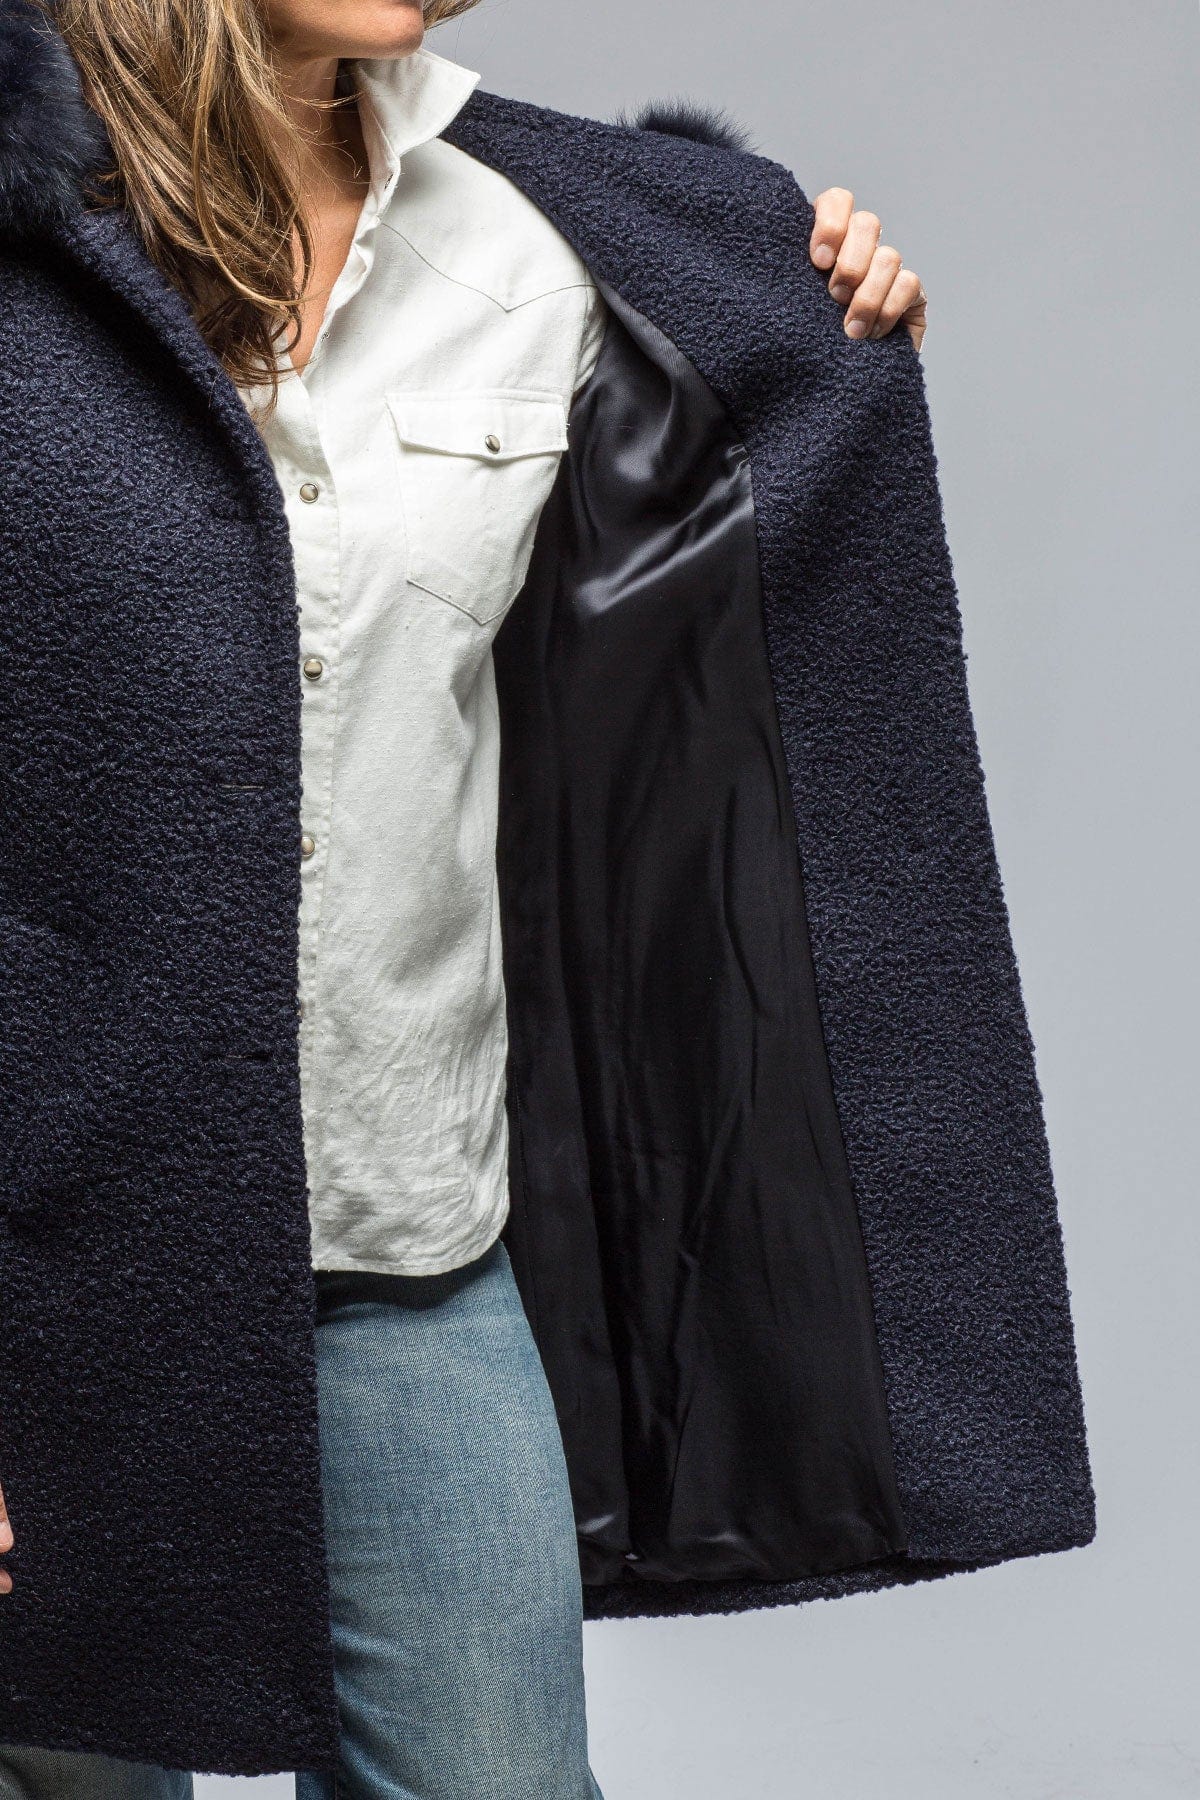 Ivana Wool Coat With Fur Lined Hood in Navy - AXEL'S